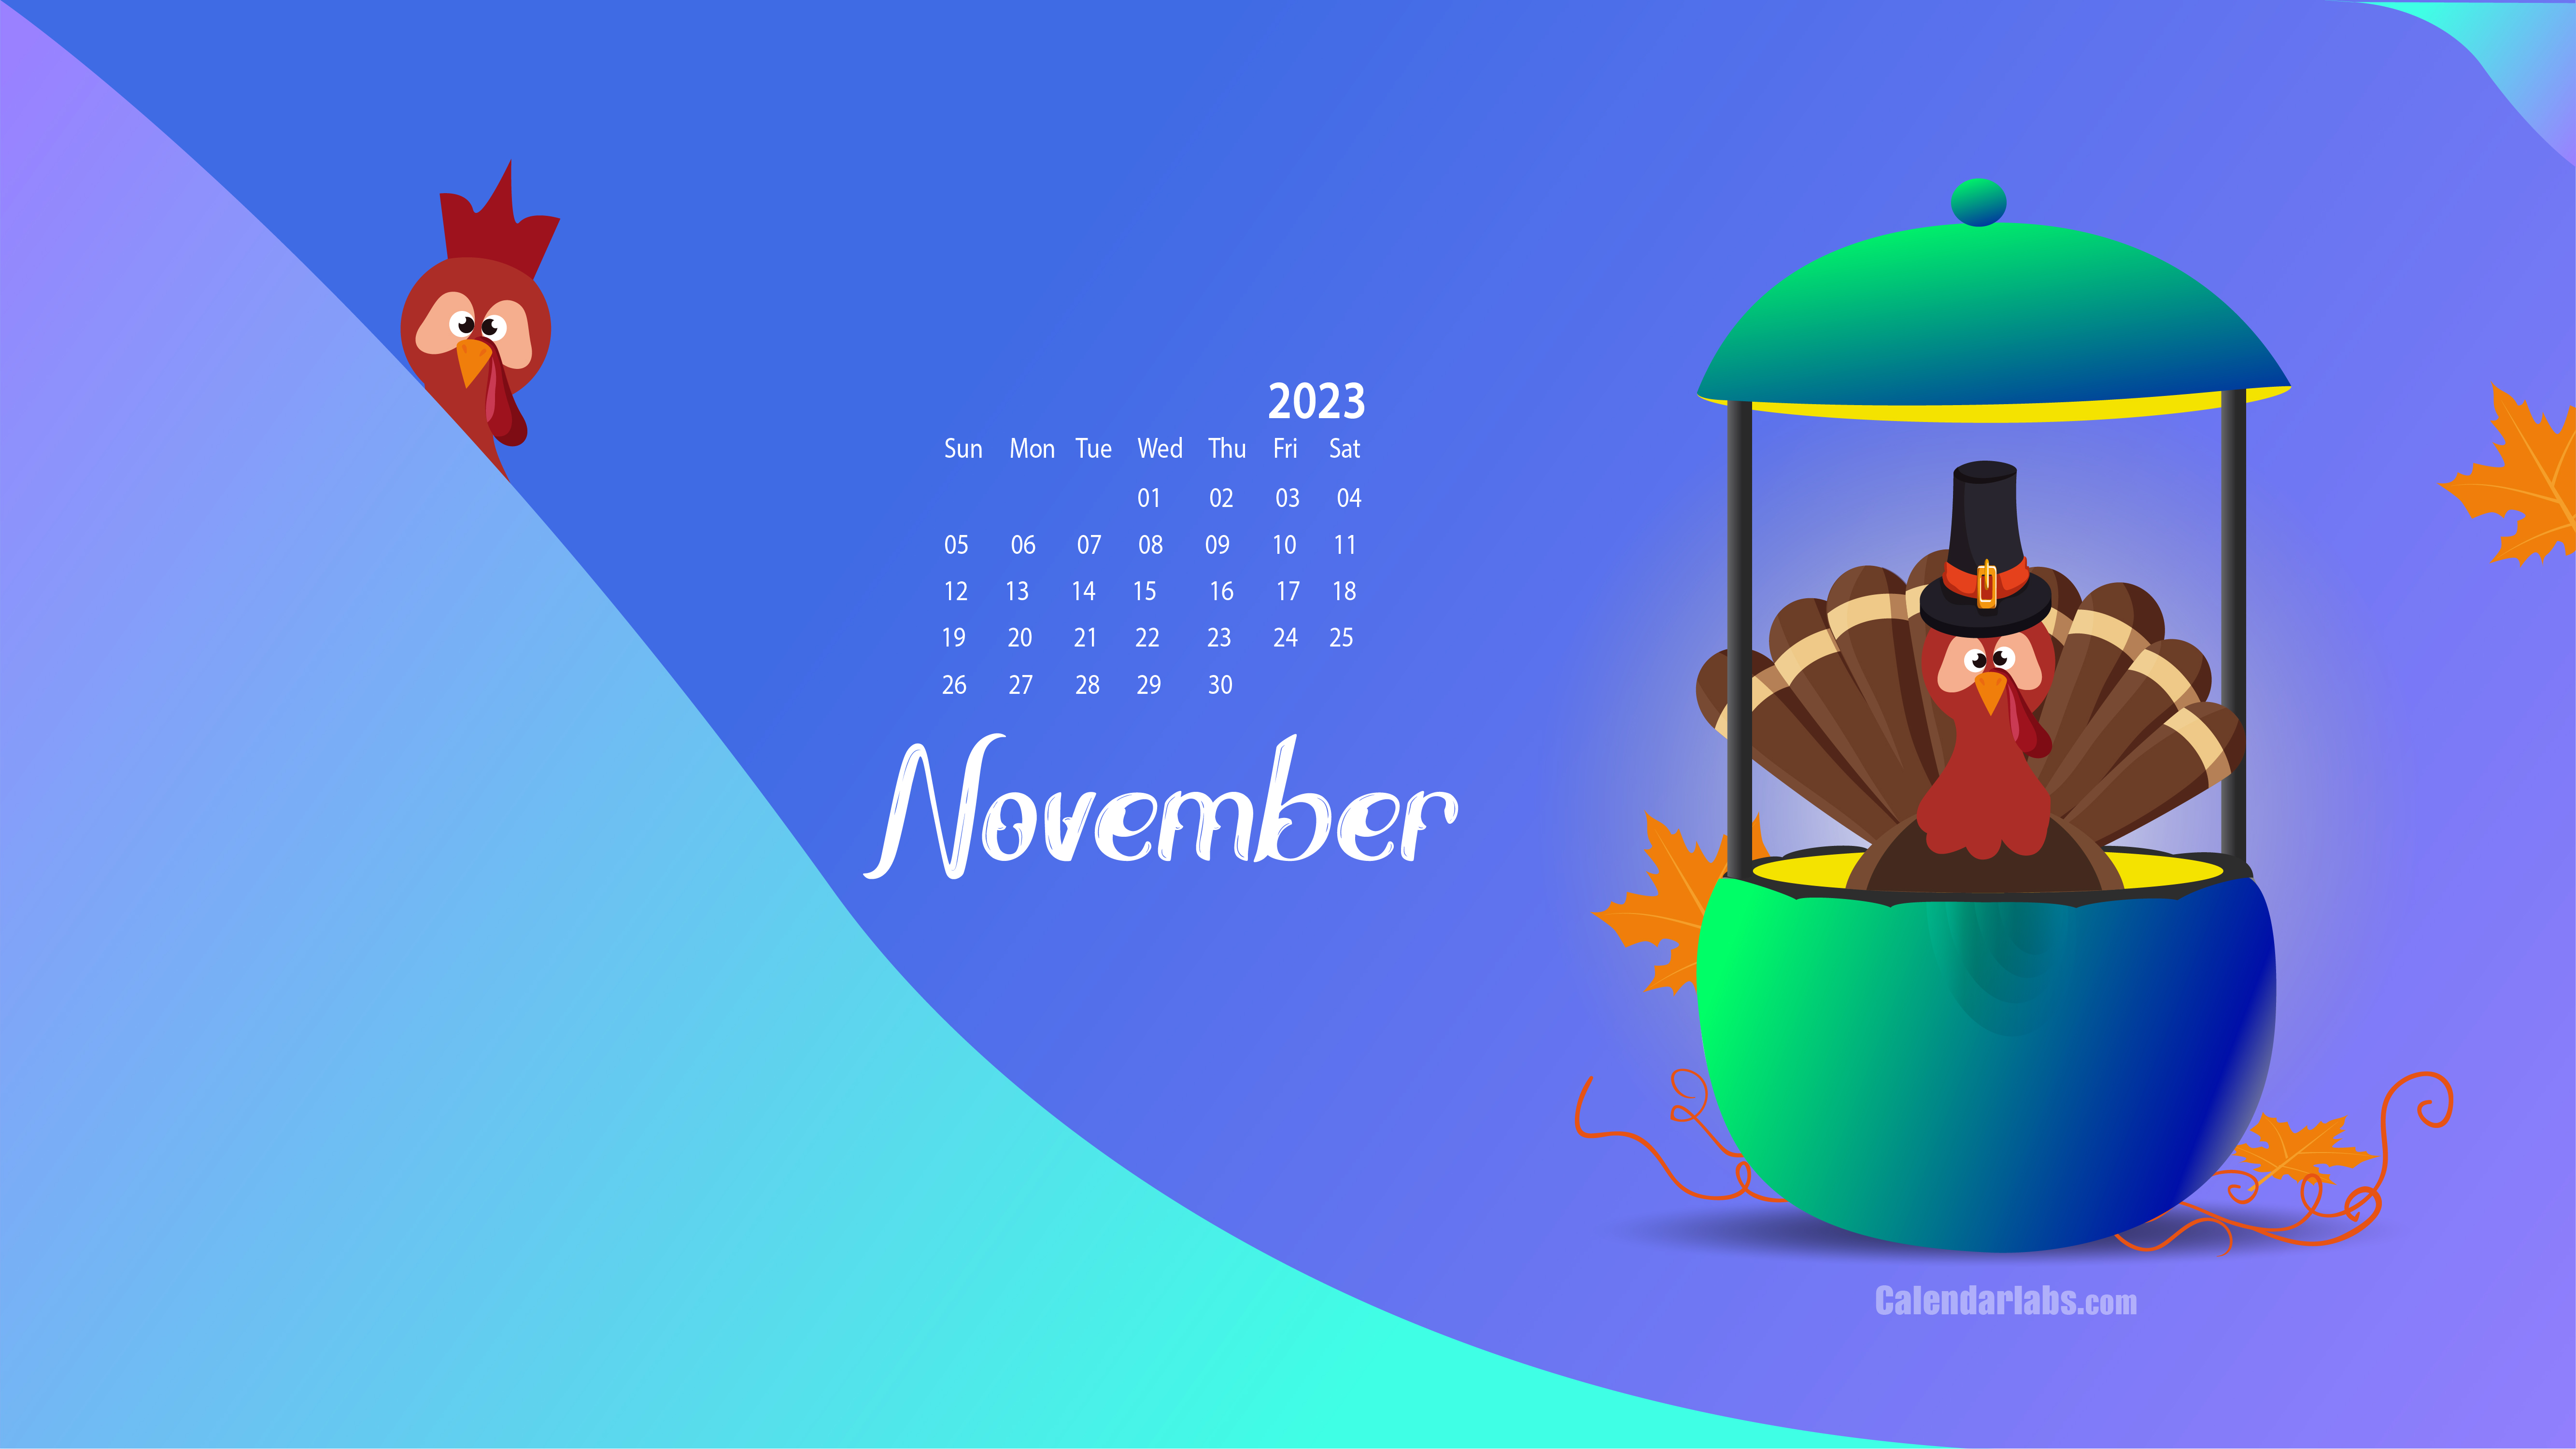 Thanksgiving  November 23, 2023 - Calendarr